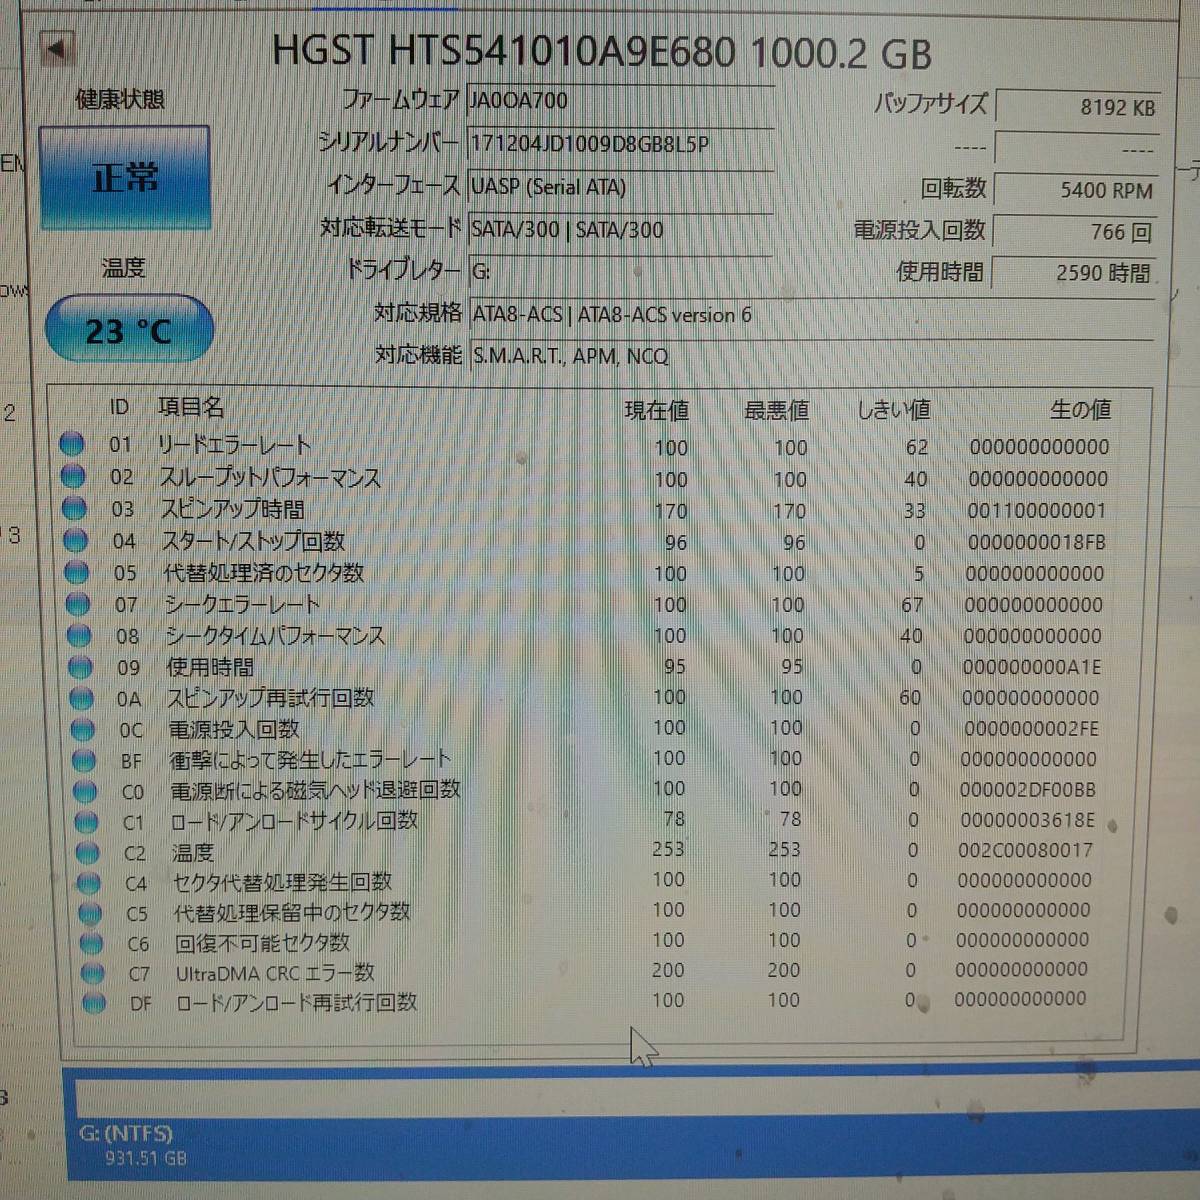 2590h★windowsPC用★ケース新品★高速USB3.0対応1000GB1TBポータブル型外付HDD★追加調整・匿名配送対応